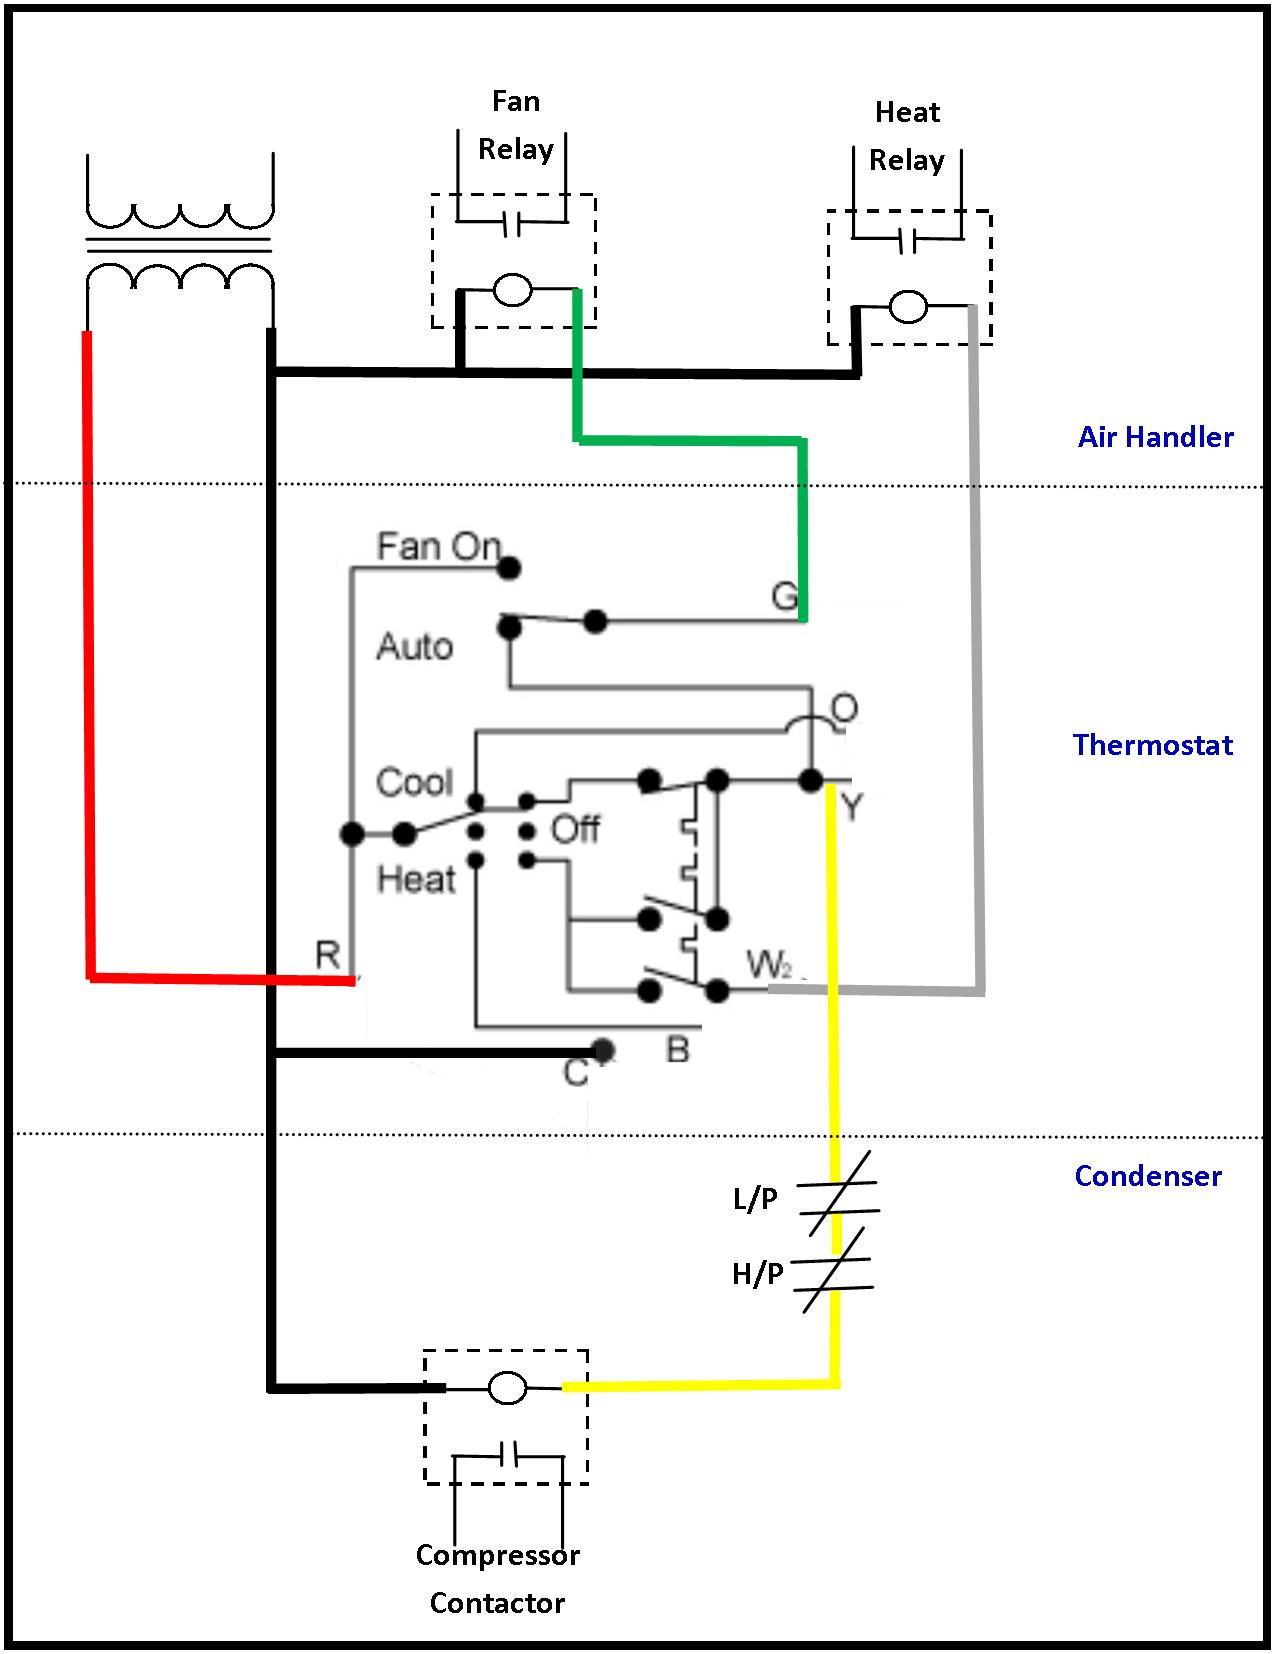 Transformer Wiring Diagram 480V To 120 240V | Wiring Diagram - 480V To 240V Transformer Wiring Diagram